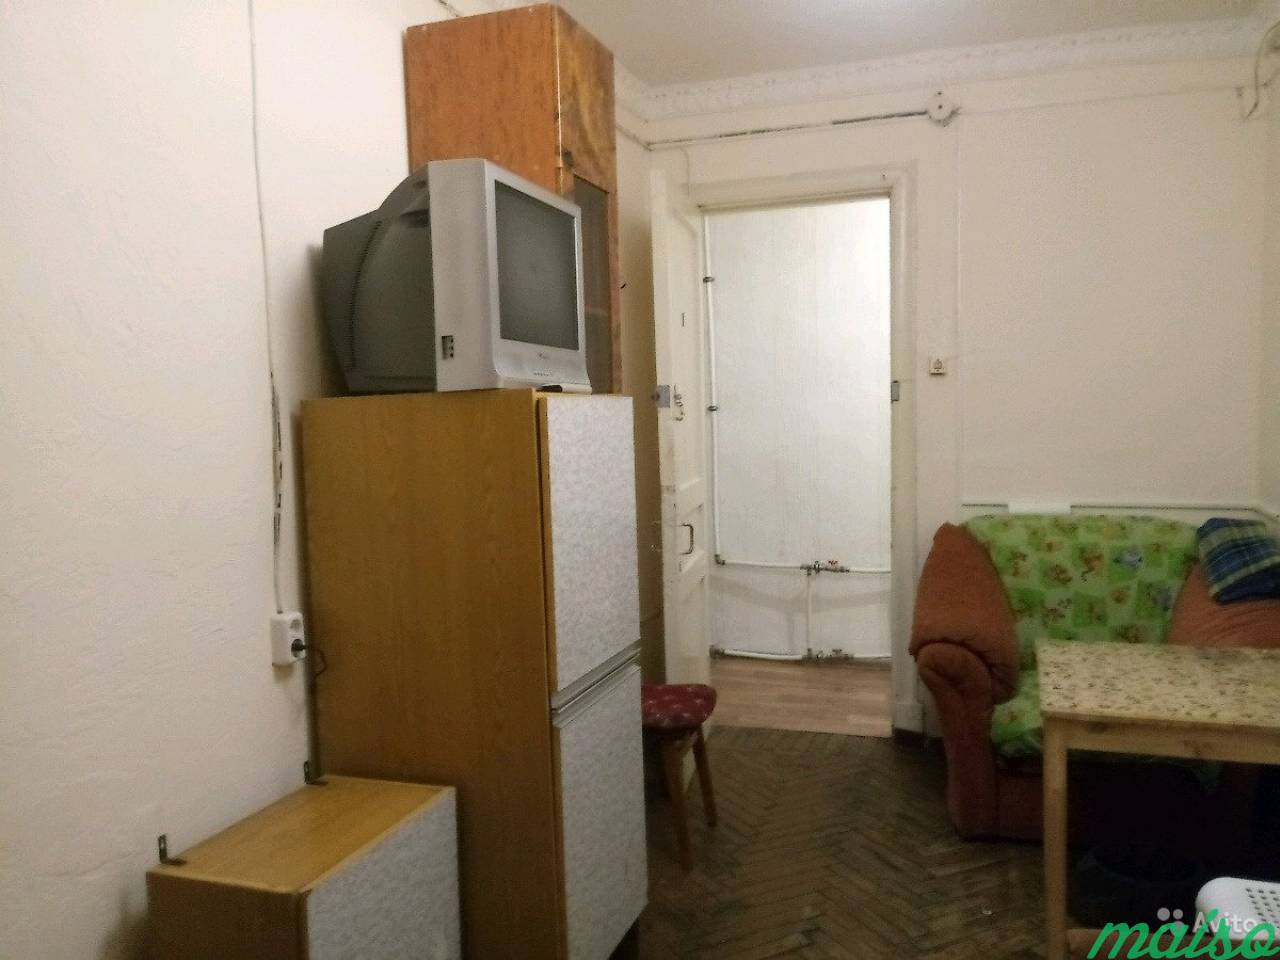 Комната 15 м² в 6-к, 2/2 эт. в Санкт-Петербурге. Фото 2